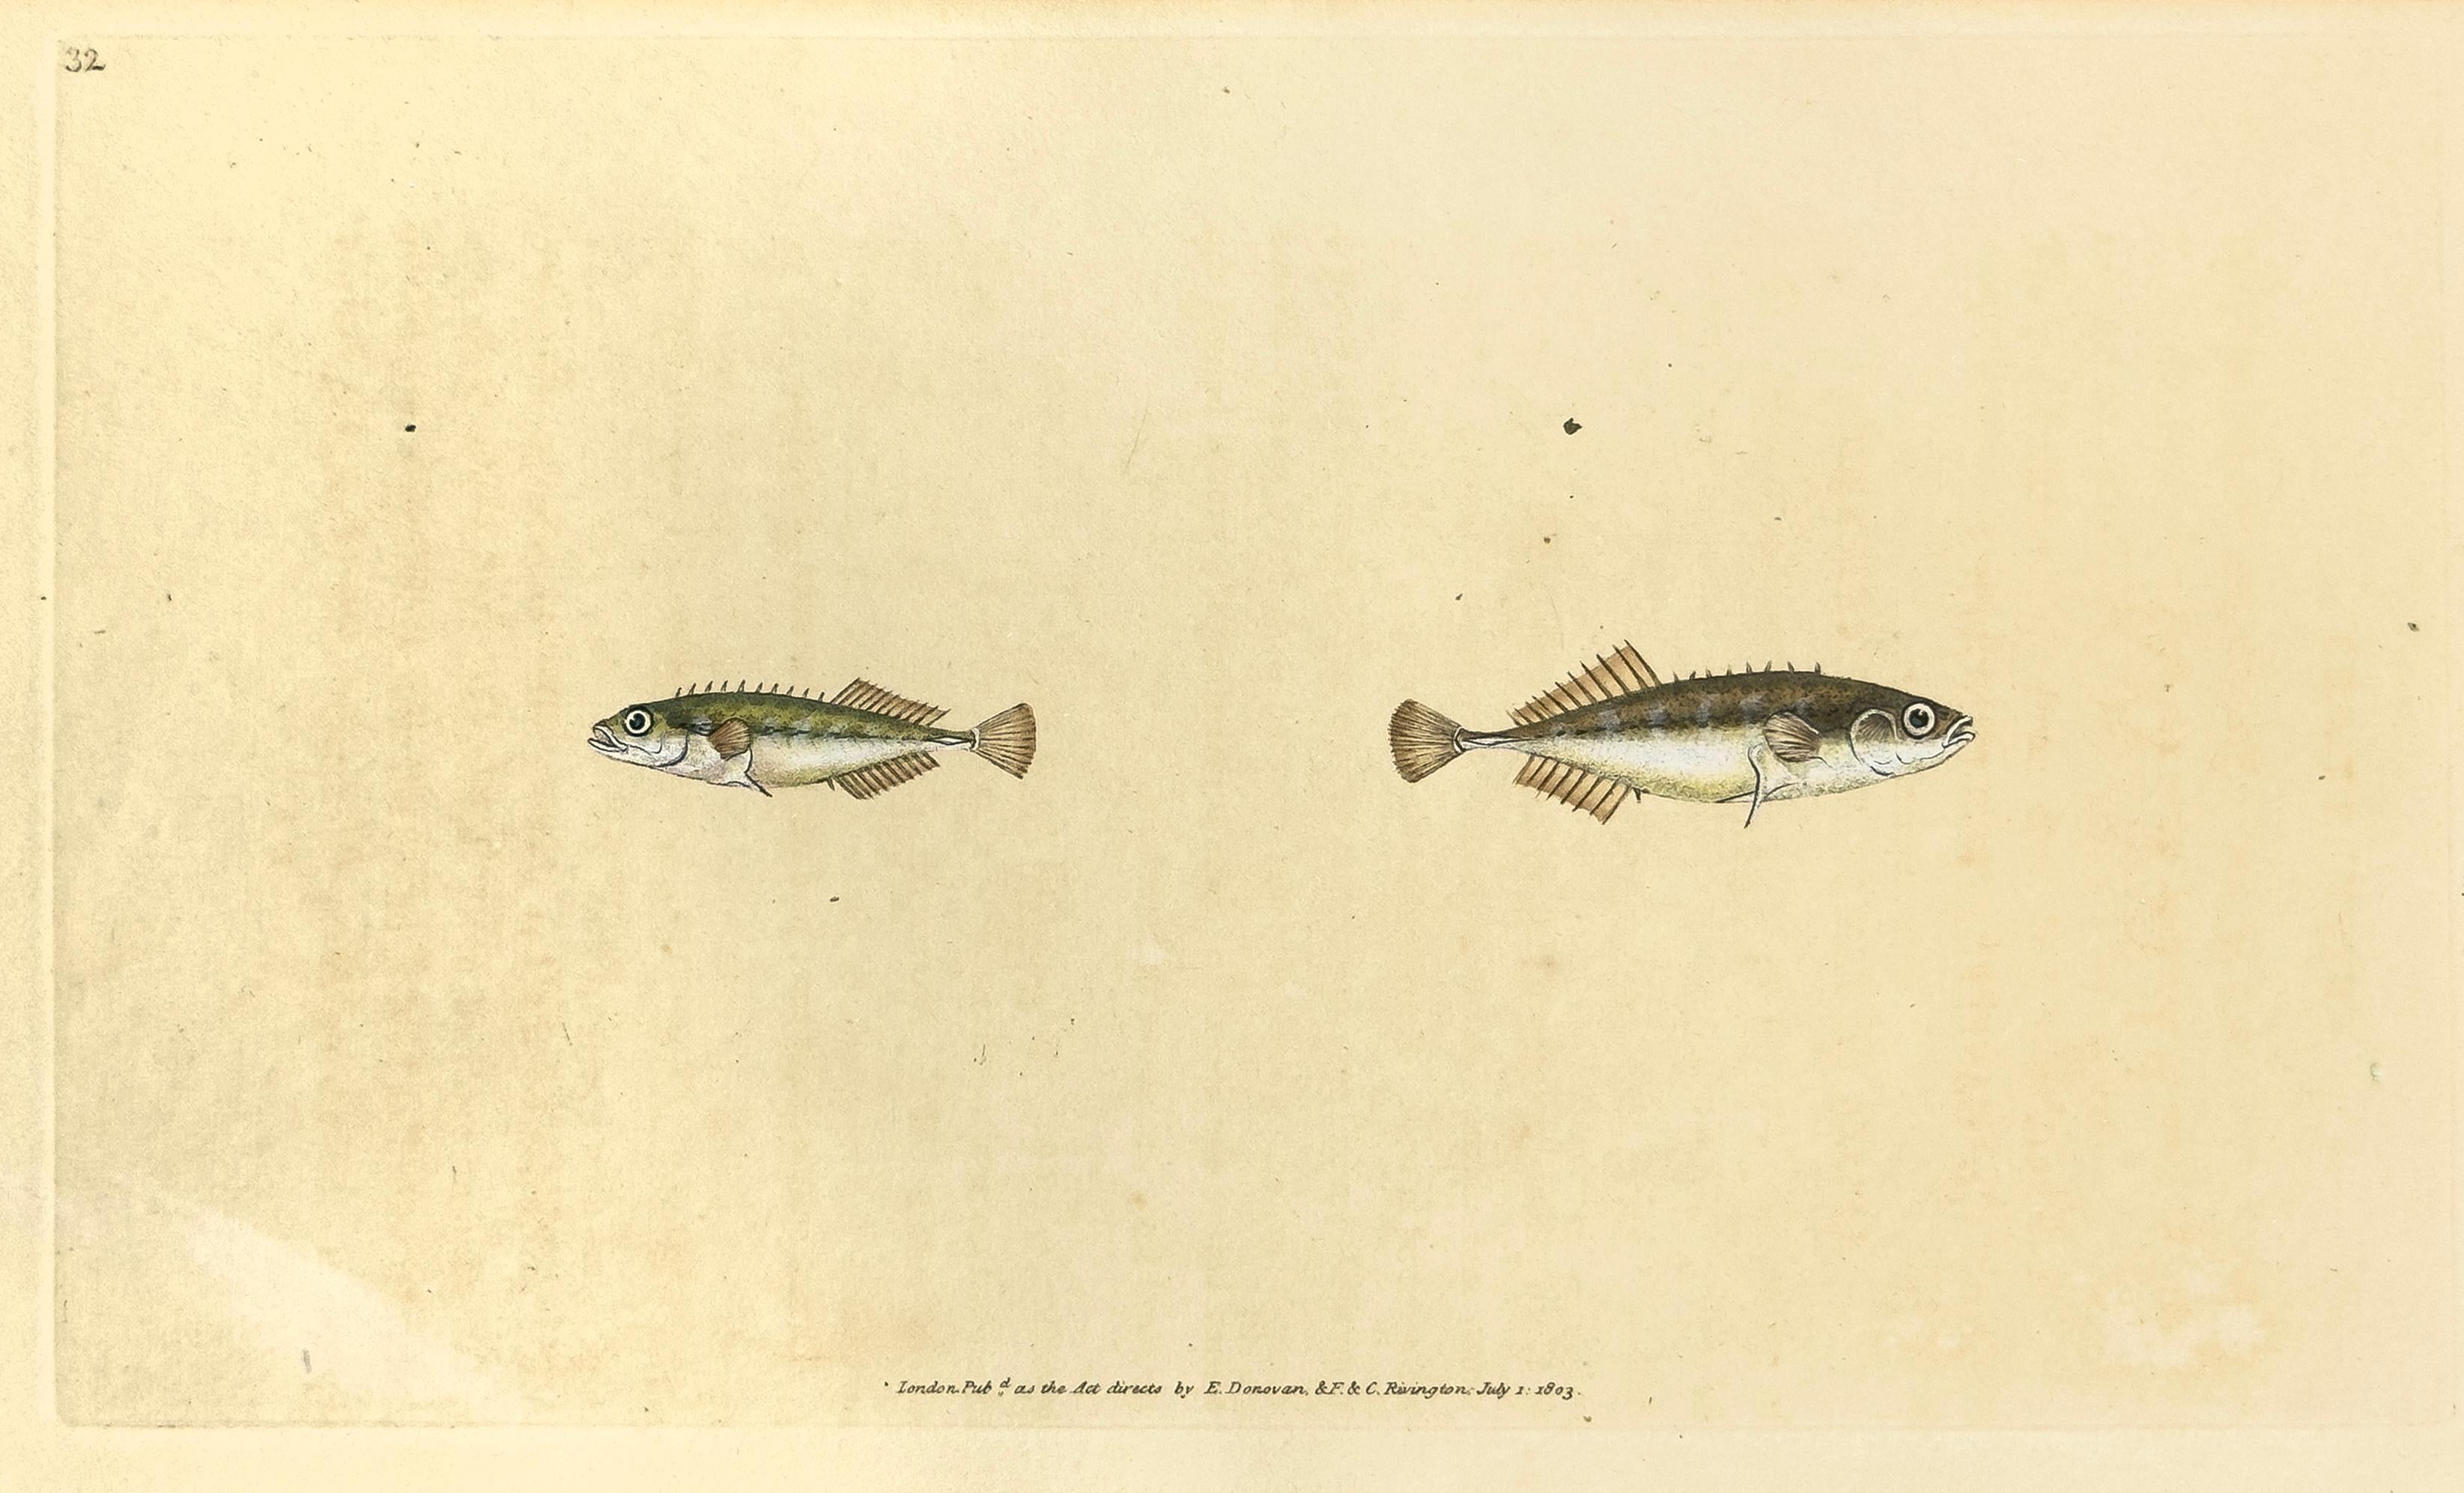 Edward Donovan Animal Print - 32: Gasterosteus pungitius, Lesser or Ten Spined Stickleback